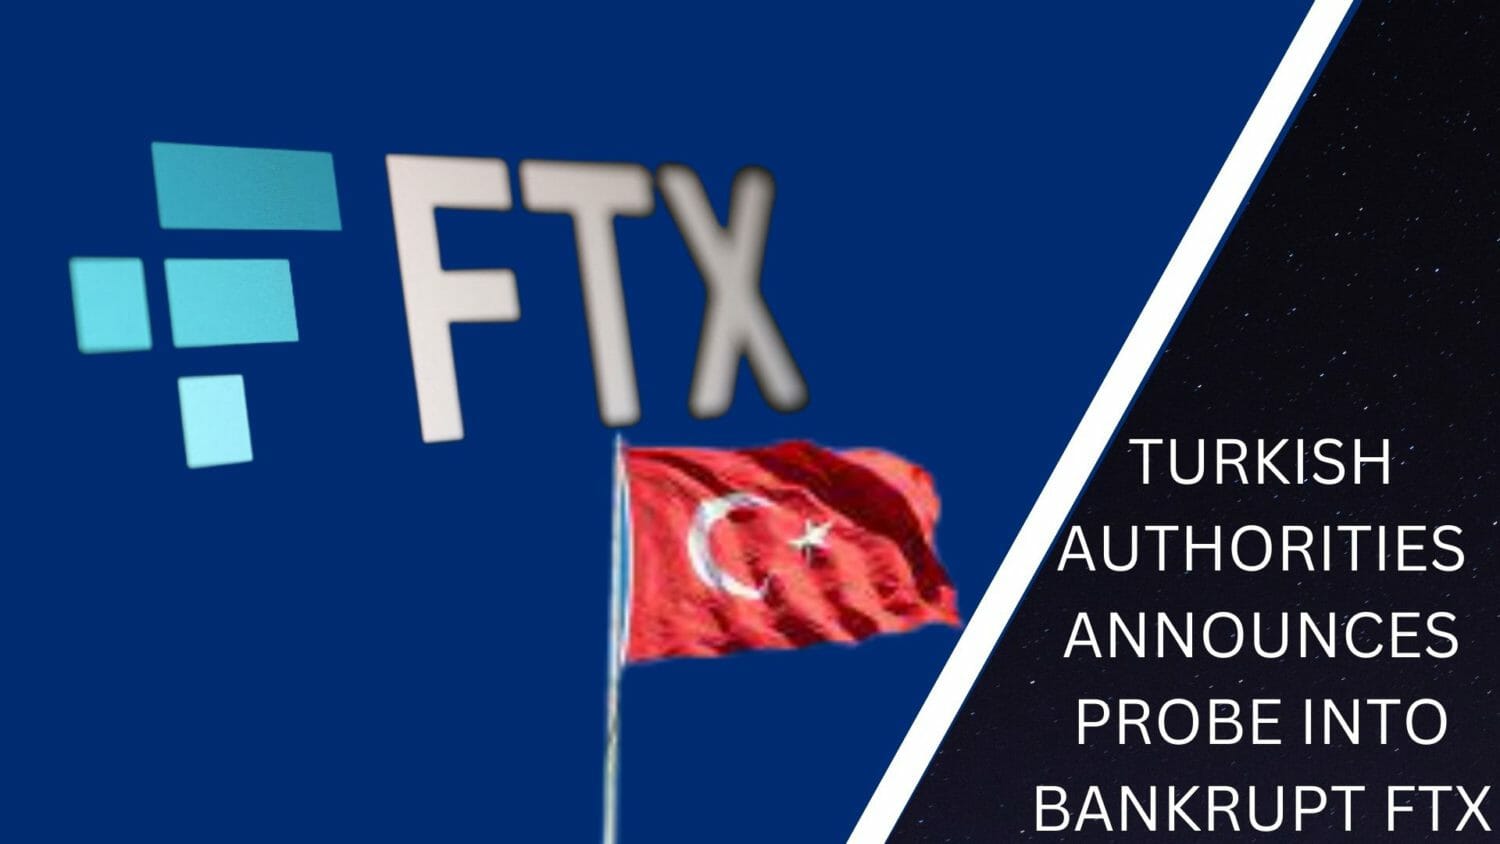 Turkish Authorities Announces Probe Into Bankrupt Ftx